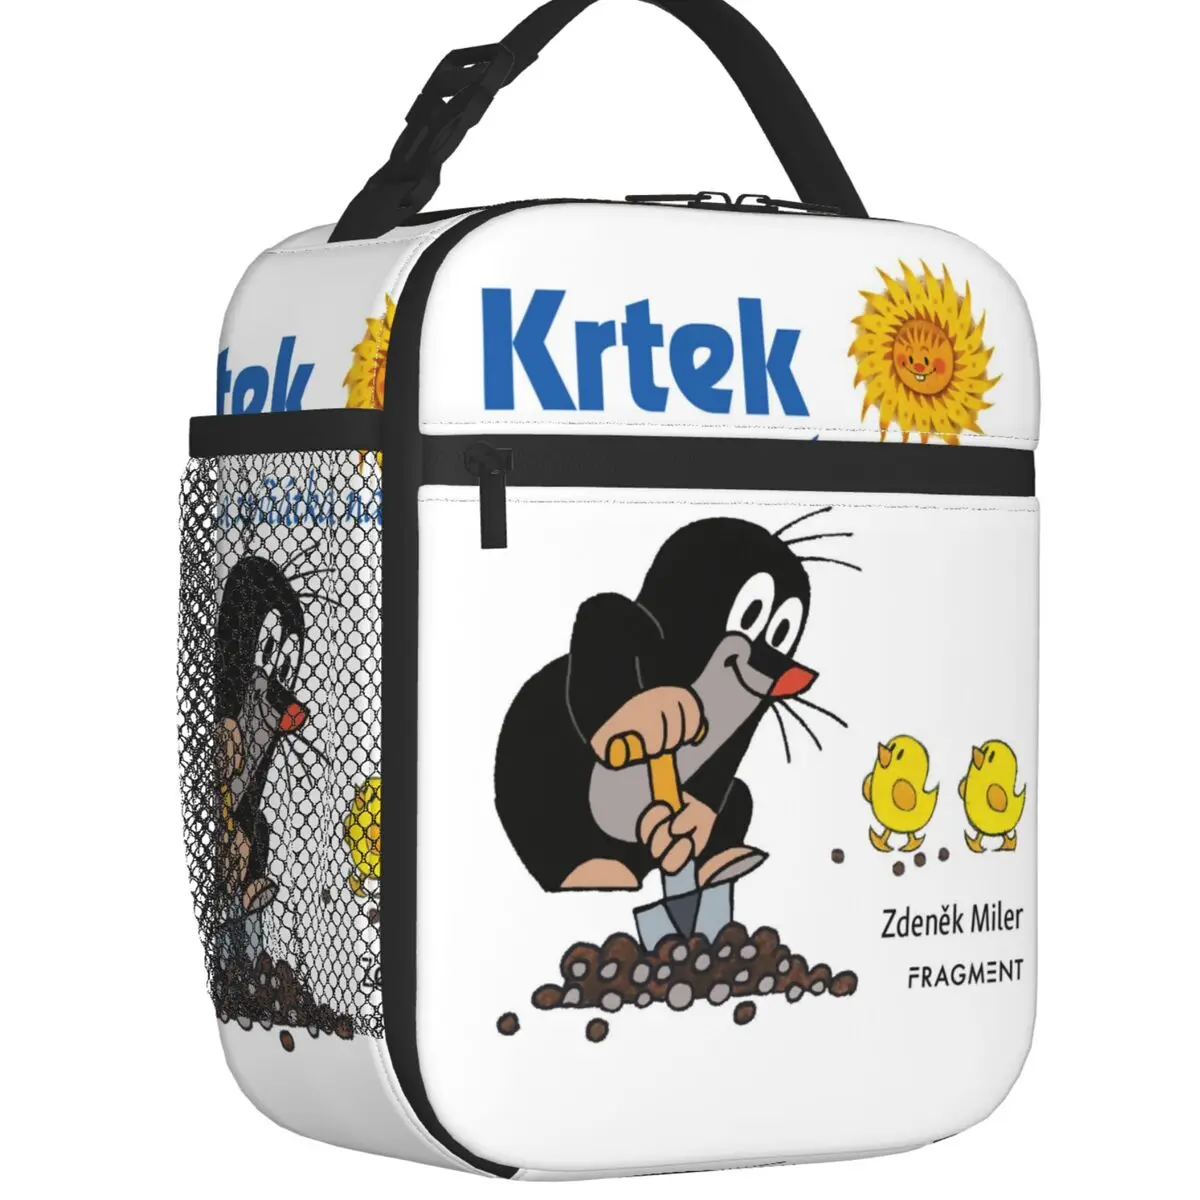 Krtek Little Maulwurf Insulated Lunch Bag for Women Portable Mole Cartoon Comic Cooler Thermal Bento Box Beach Camping Travel